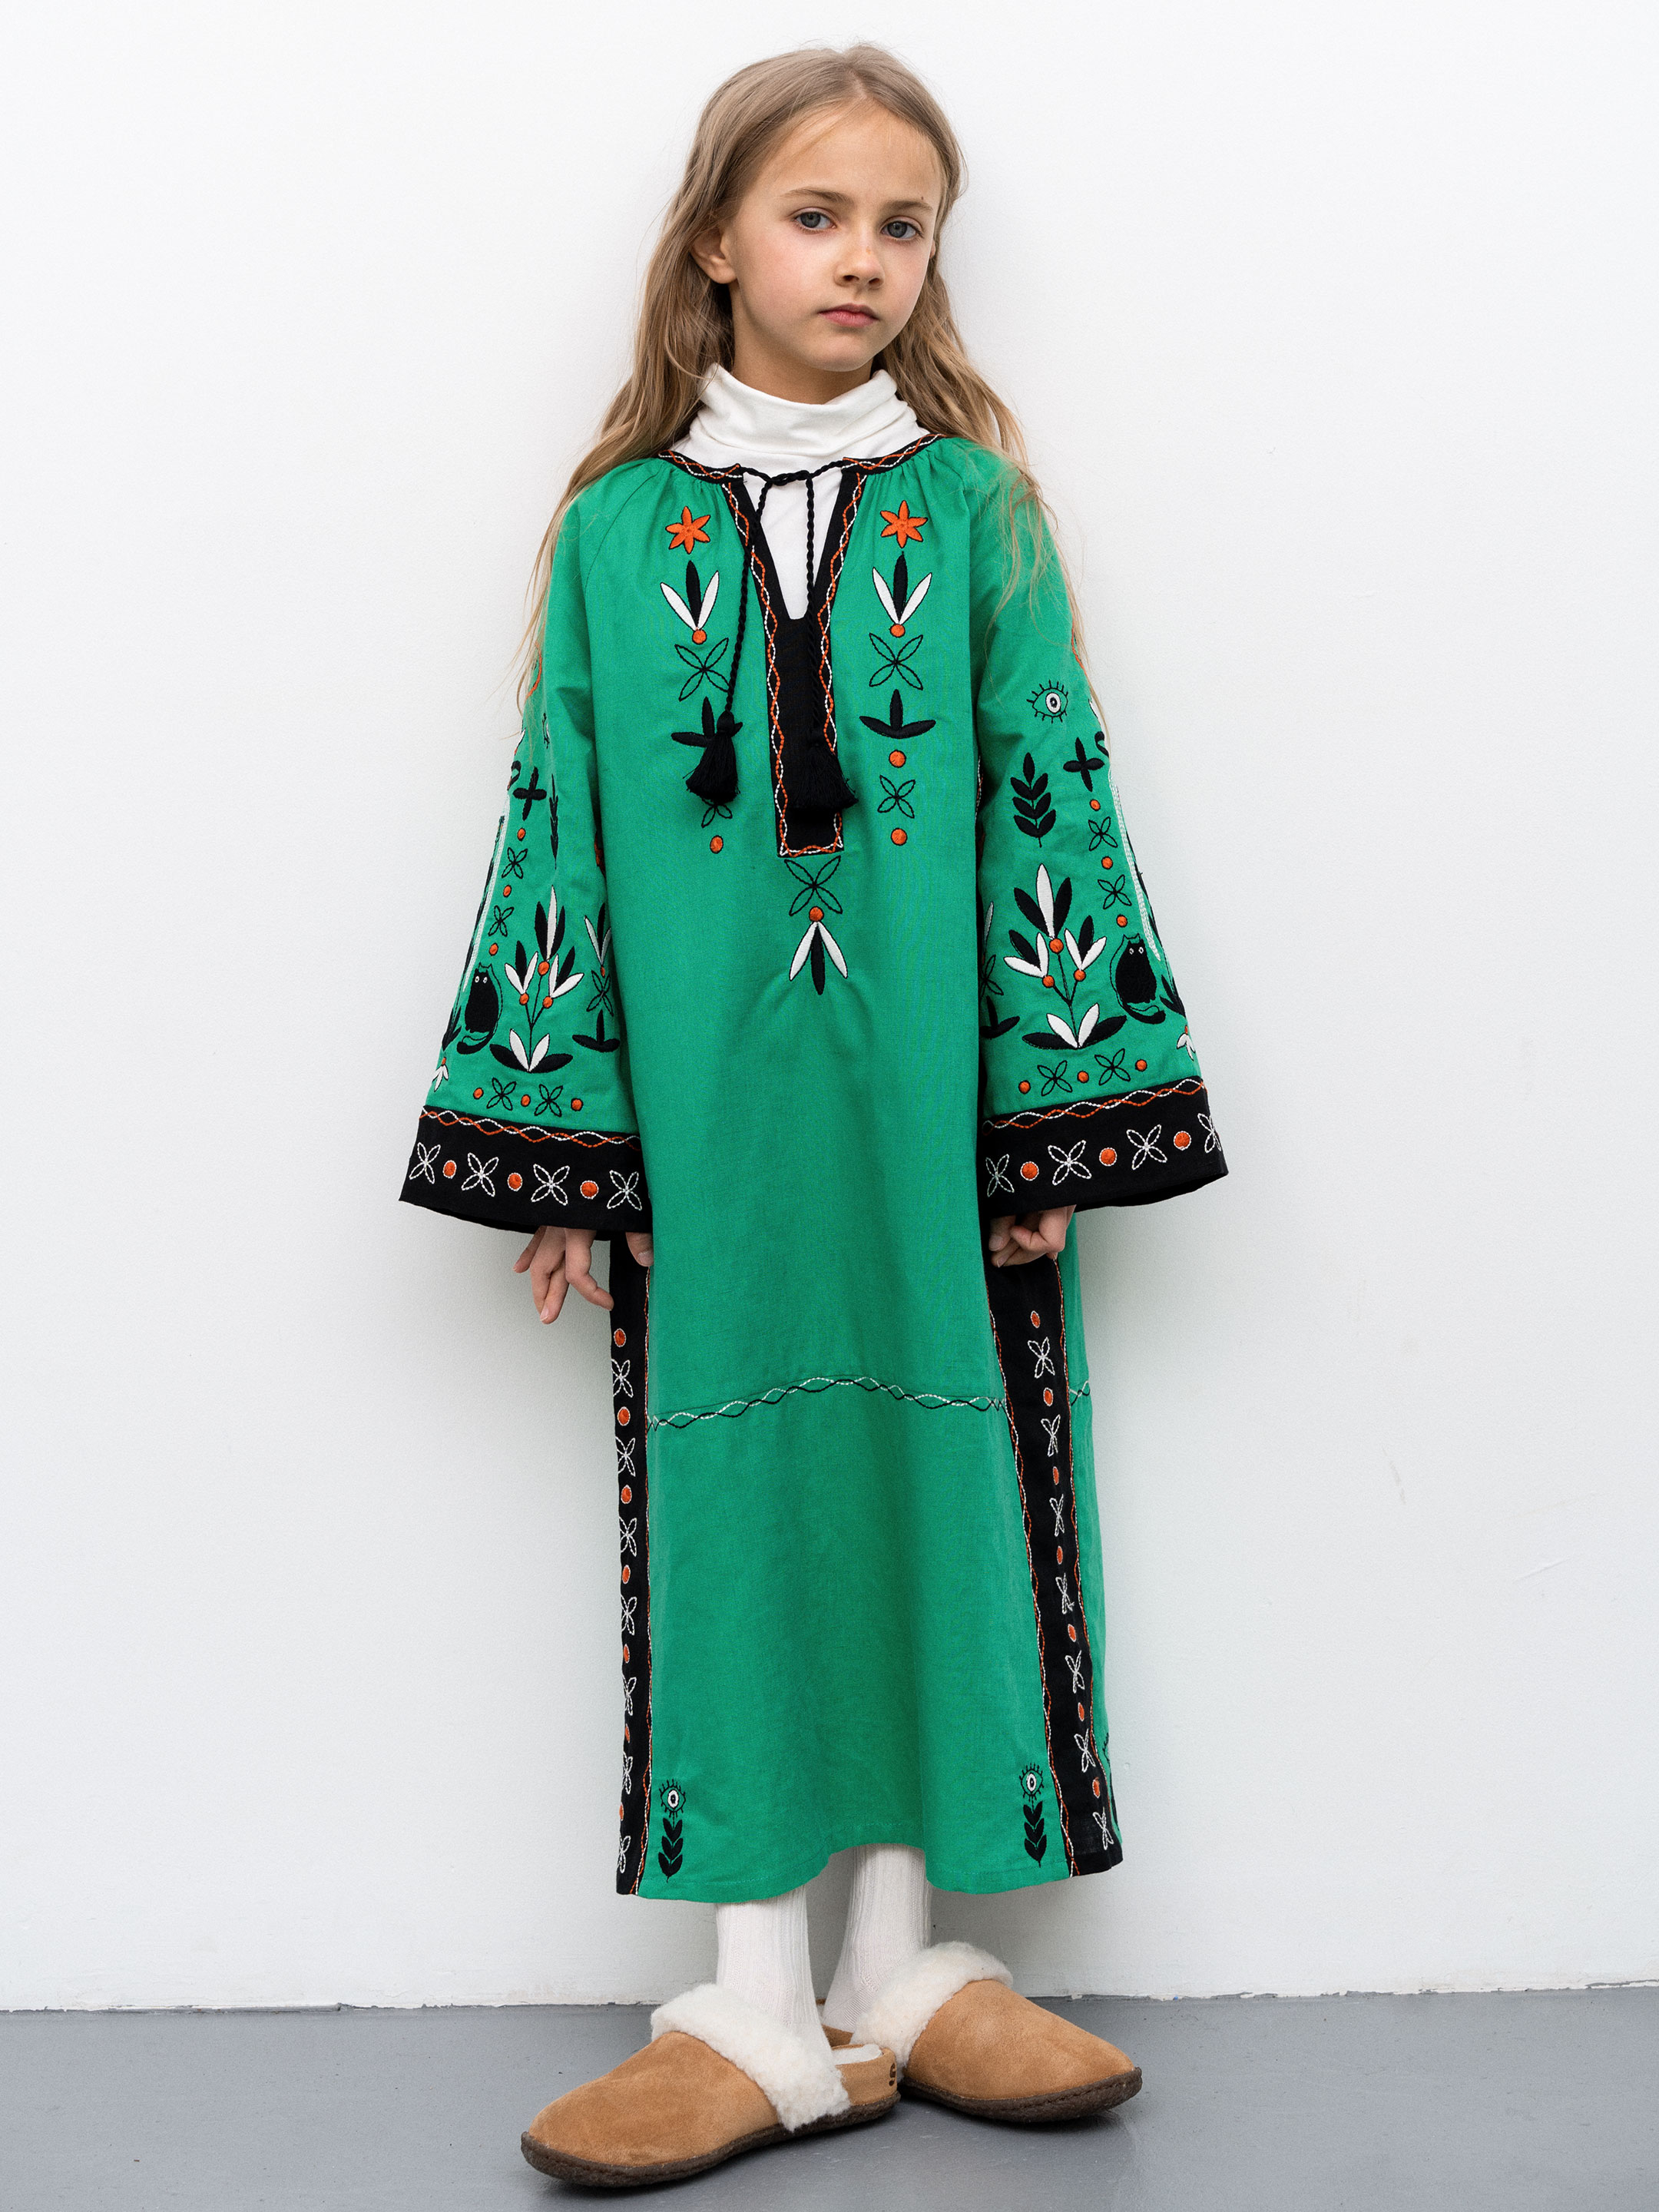 Divchyna Trostynka embroidered children's dress - photo 1